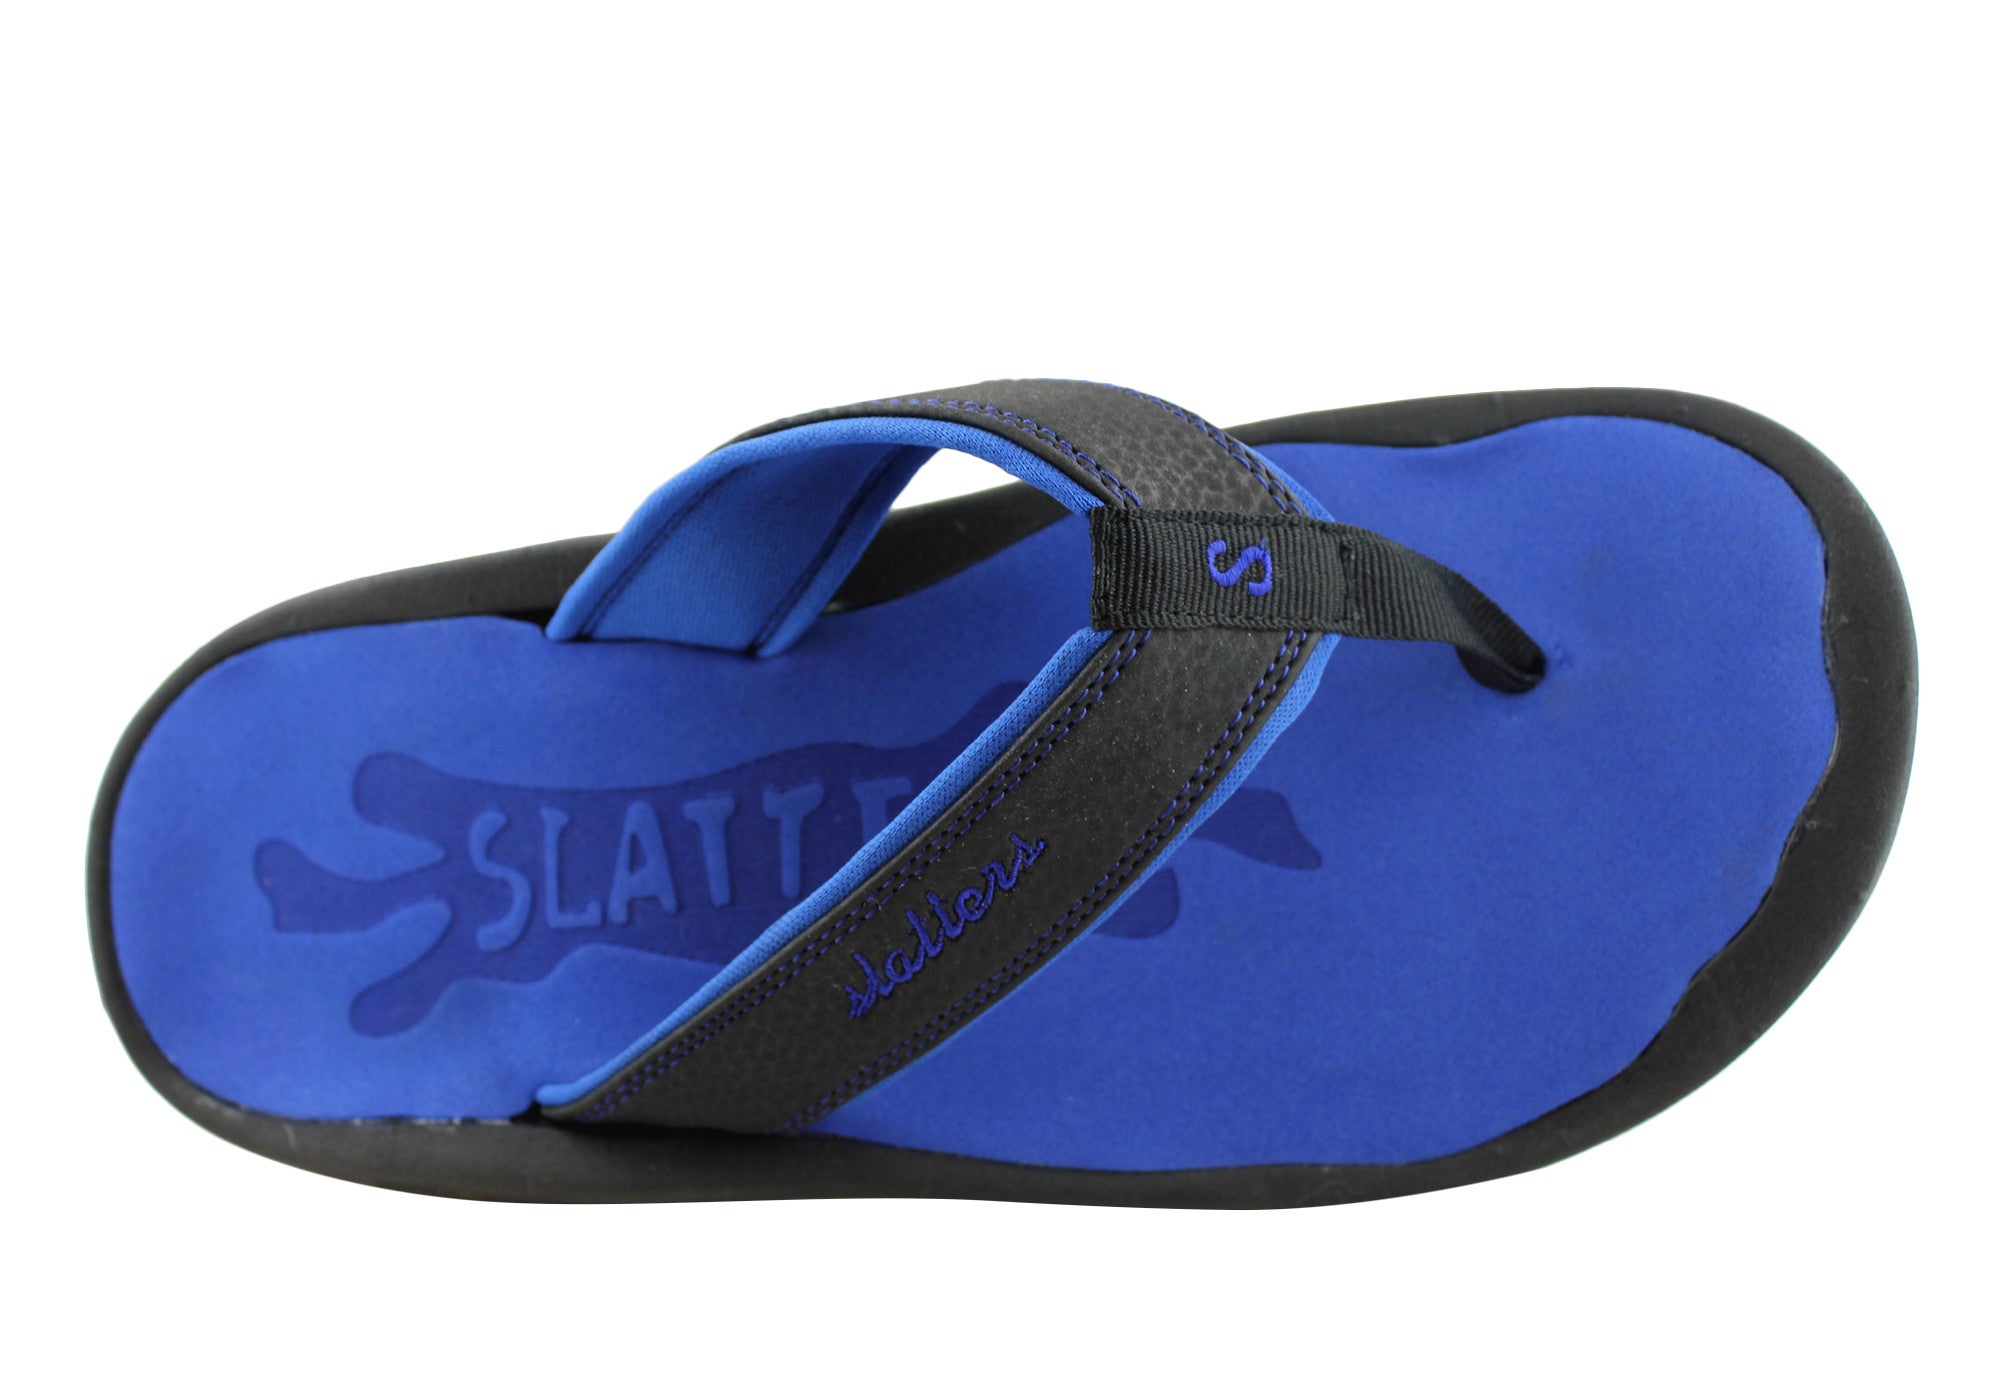 Slatters Splash Mens Summer Comfortable Thongs